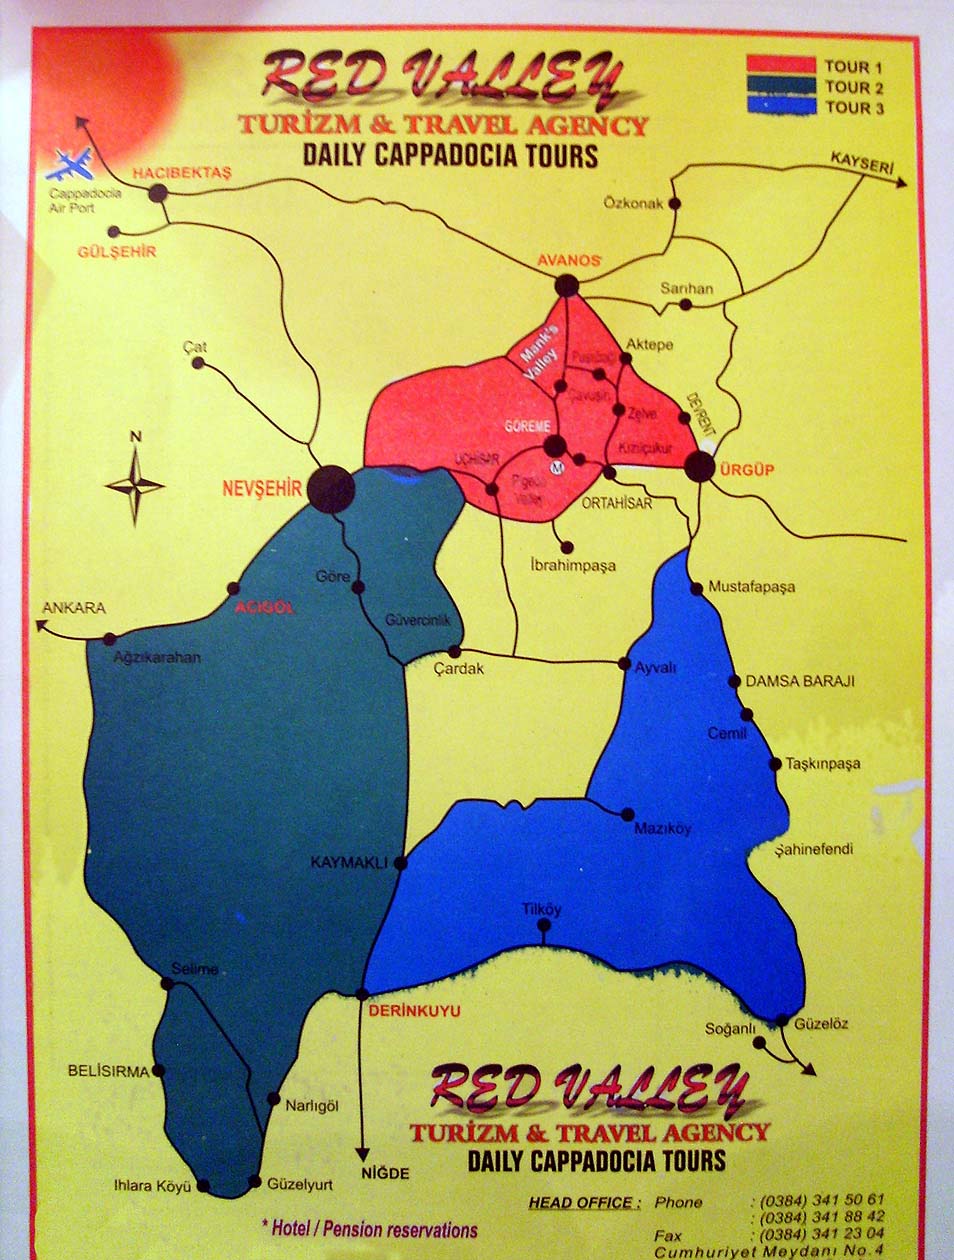 Kapadokya blgesi haritas zerinde gnlk (3 farkl renk) gezi turu seenekleri / Red Valley Travel